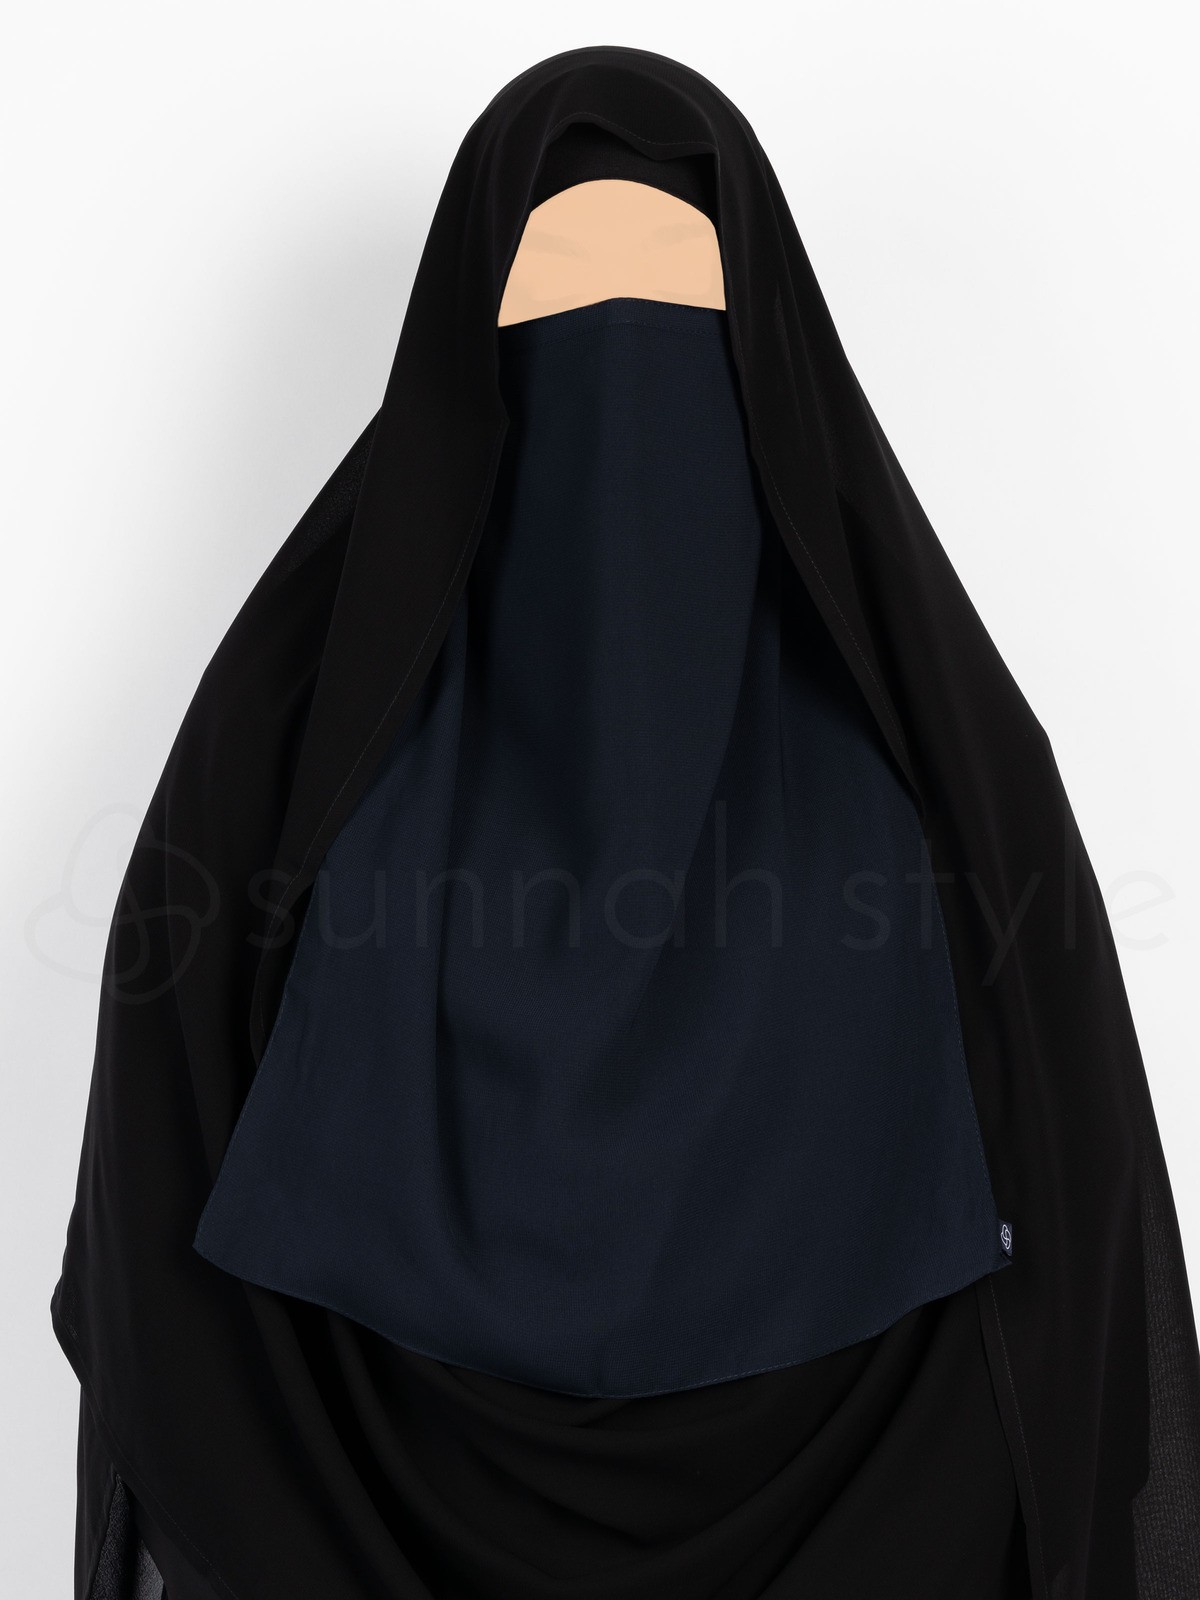 Sunnah Style - Long Tying Half Niqab (Premium Chiffon) (Black)